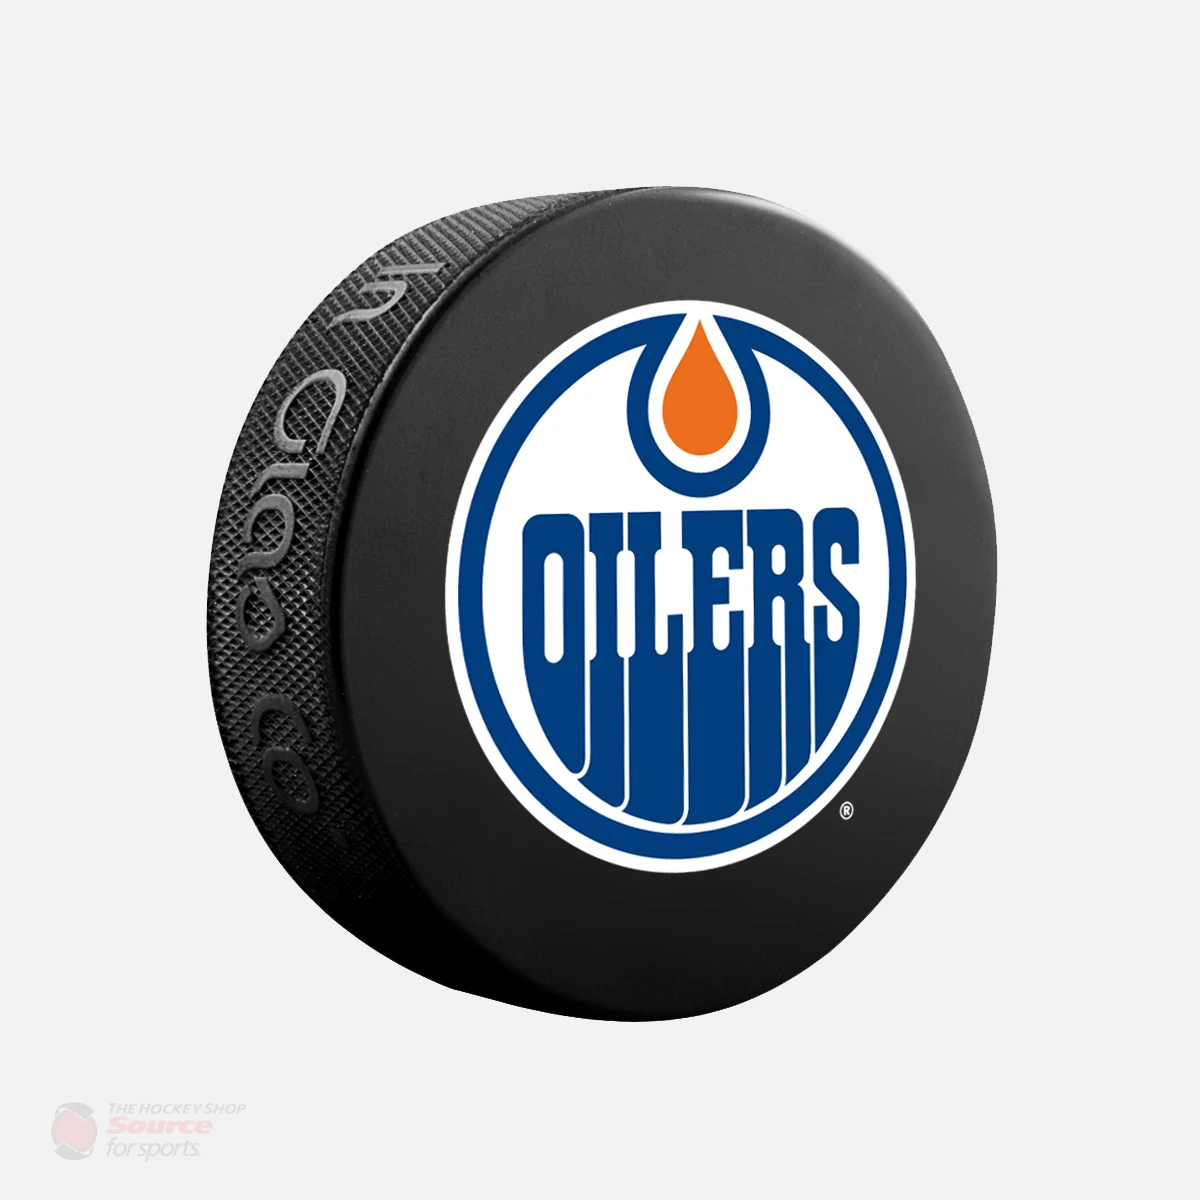 Ryan Smyth Edmonton Oilers Autographed Signed Alt Retro Fanatics Jersey